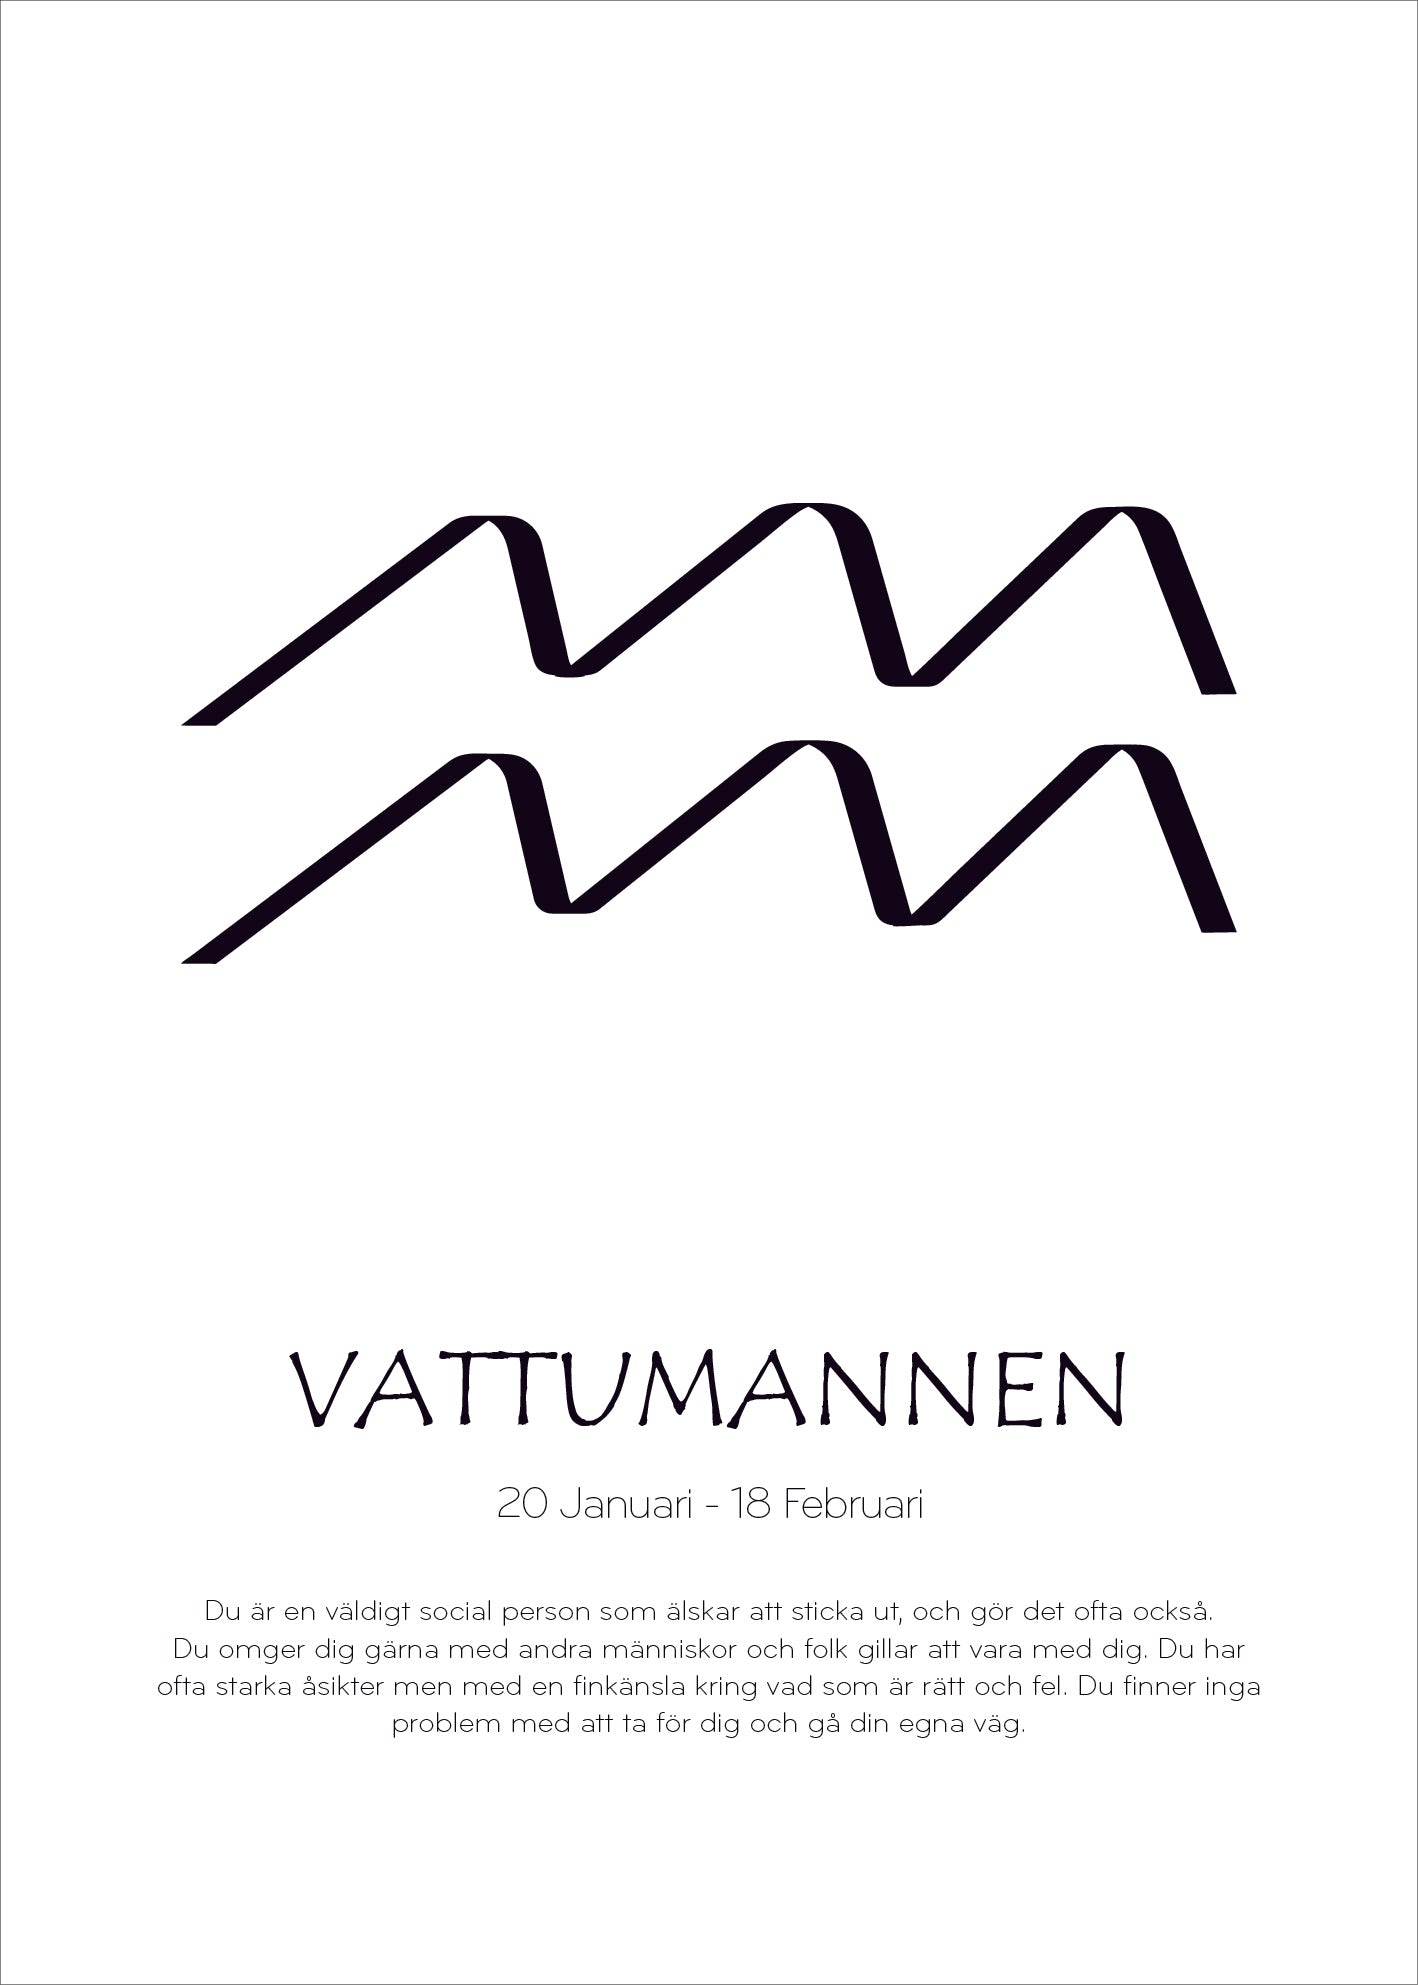 Stjärntecken symbol vit bakgrund Vattumannen - Svensk text